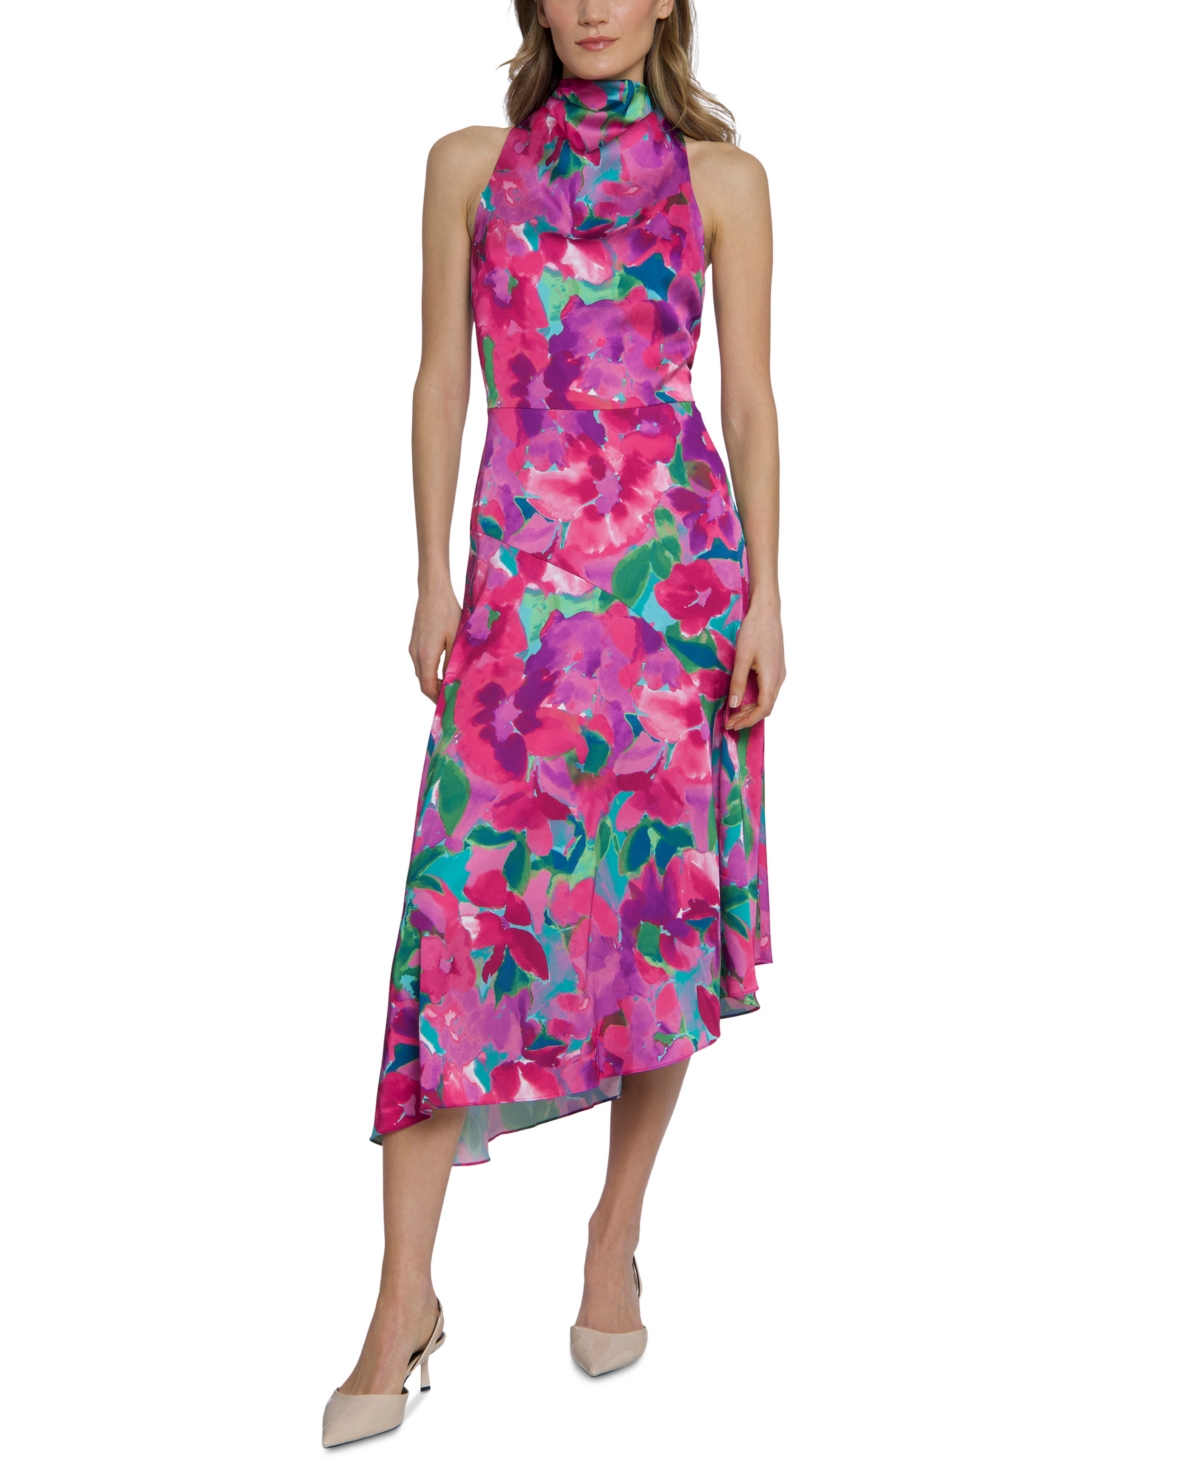 Women's Floral Cowlneck Asymmetric Dress - Aqua/pink